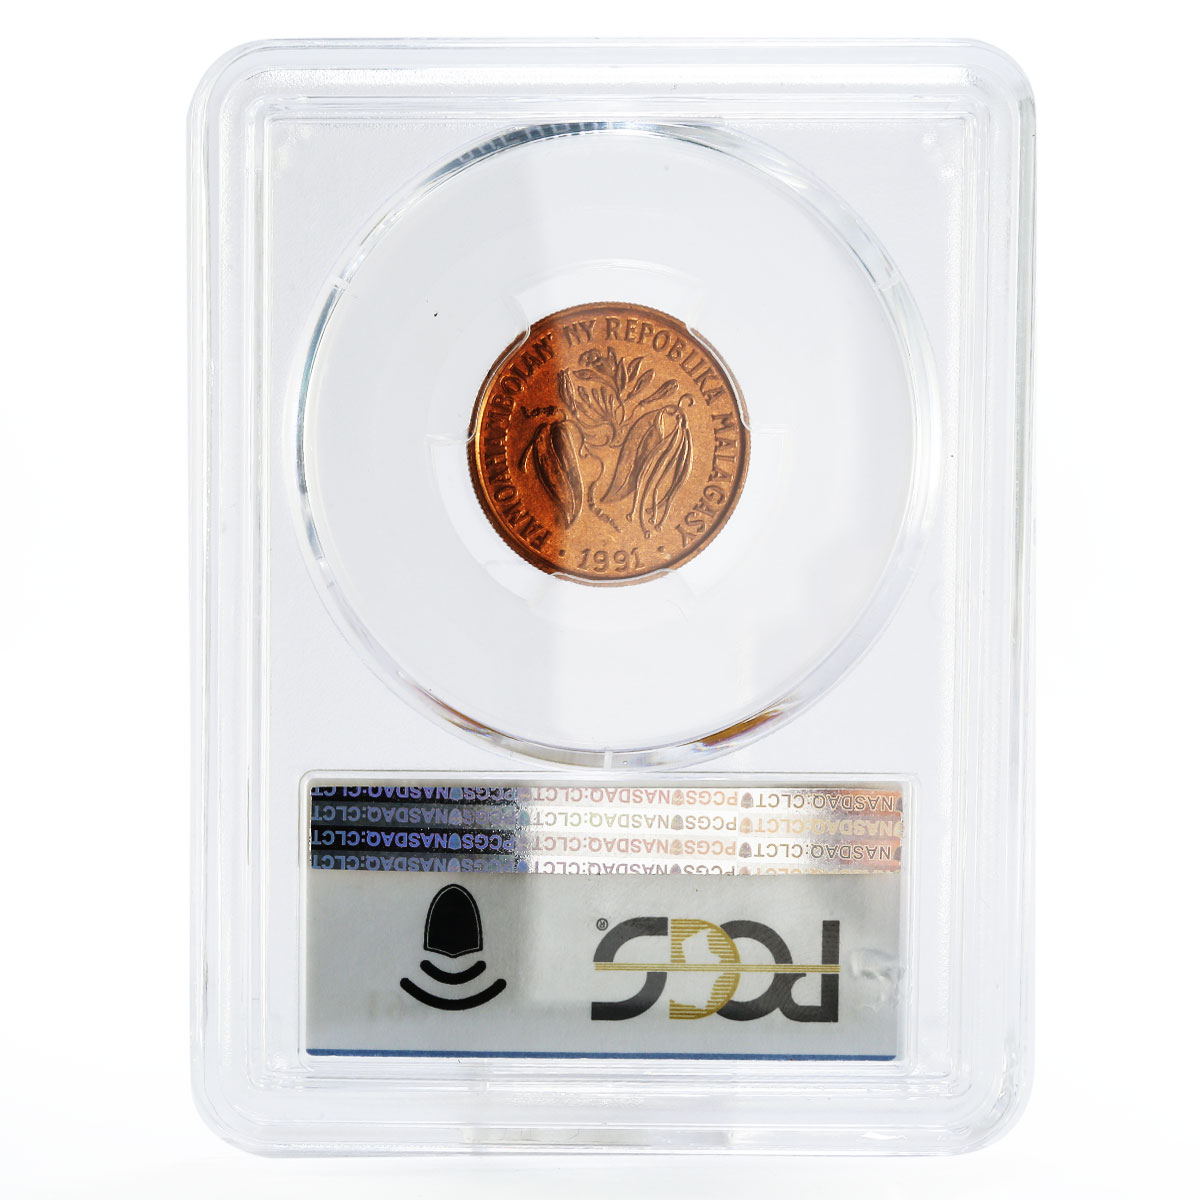 Madagascar 10 francs FAO series Bull MS67 PCGS copper coin 1991